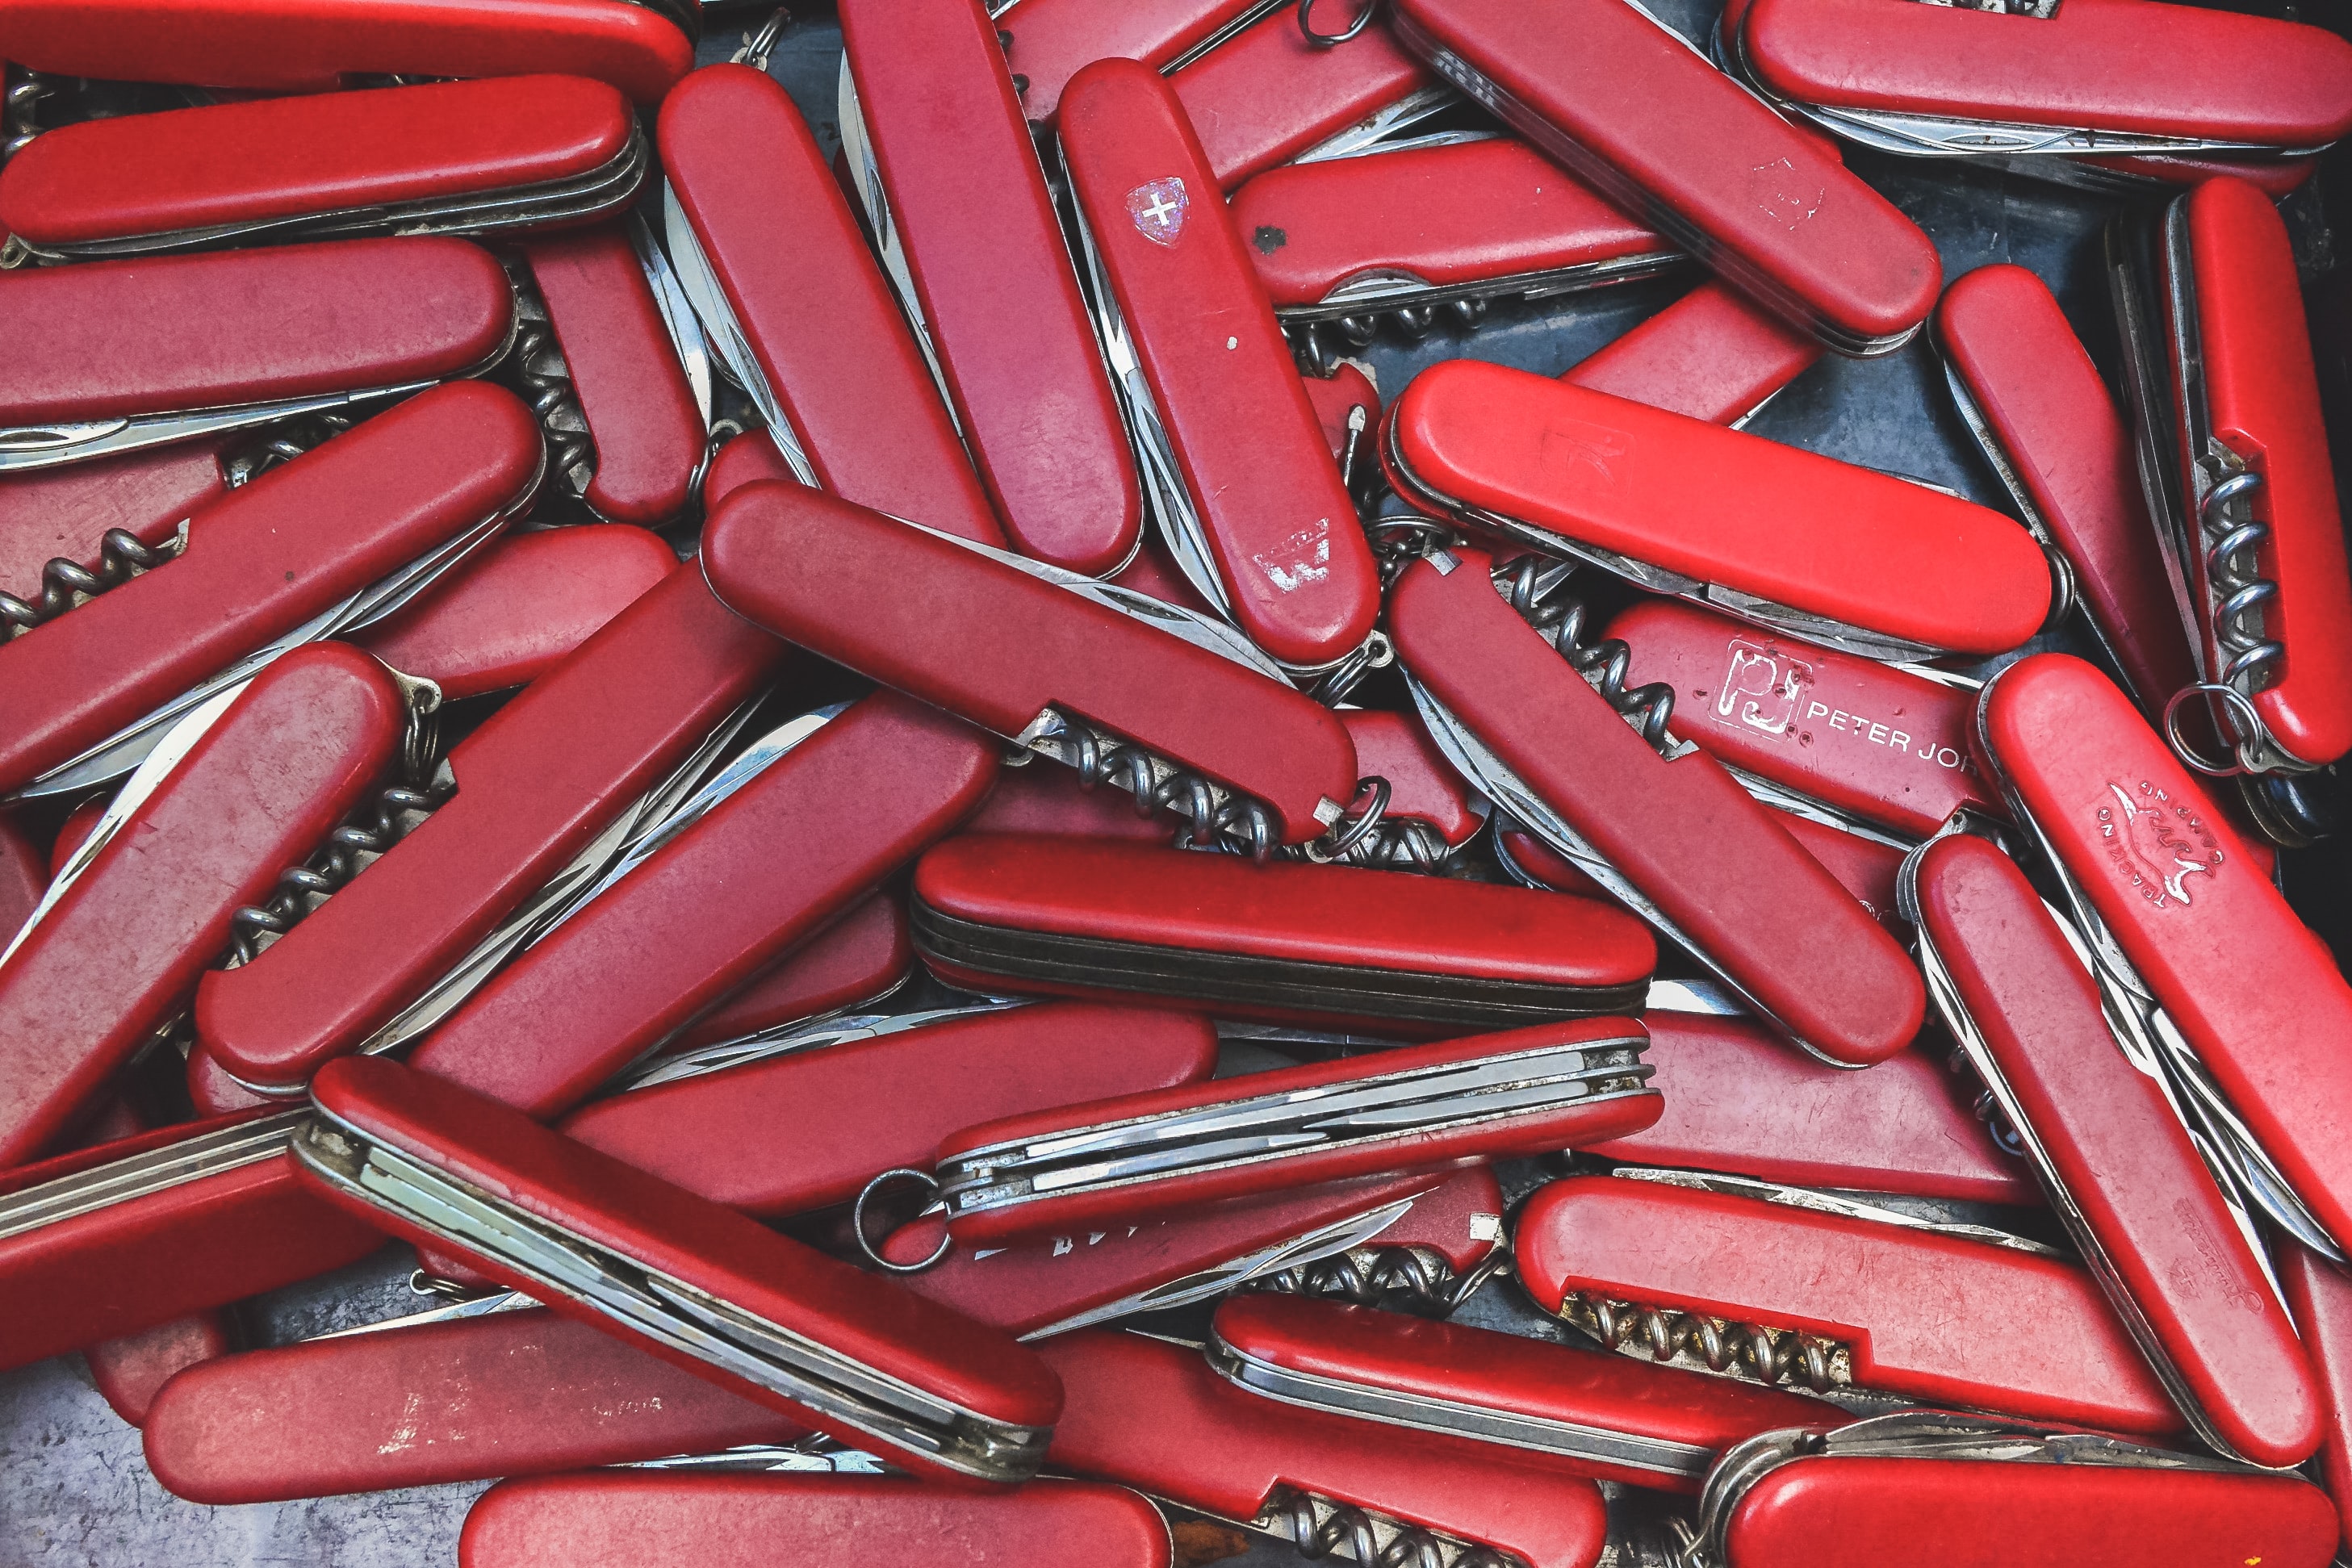 Closeup of many Swiss Army knives